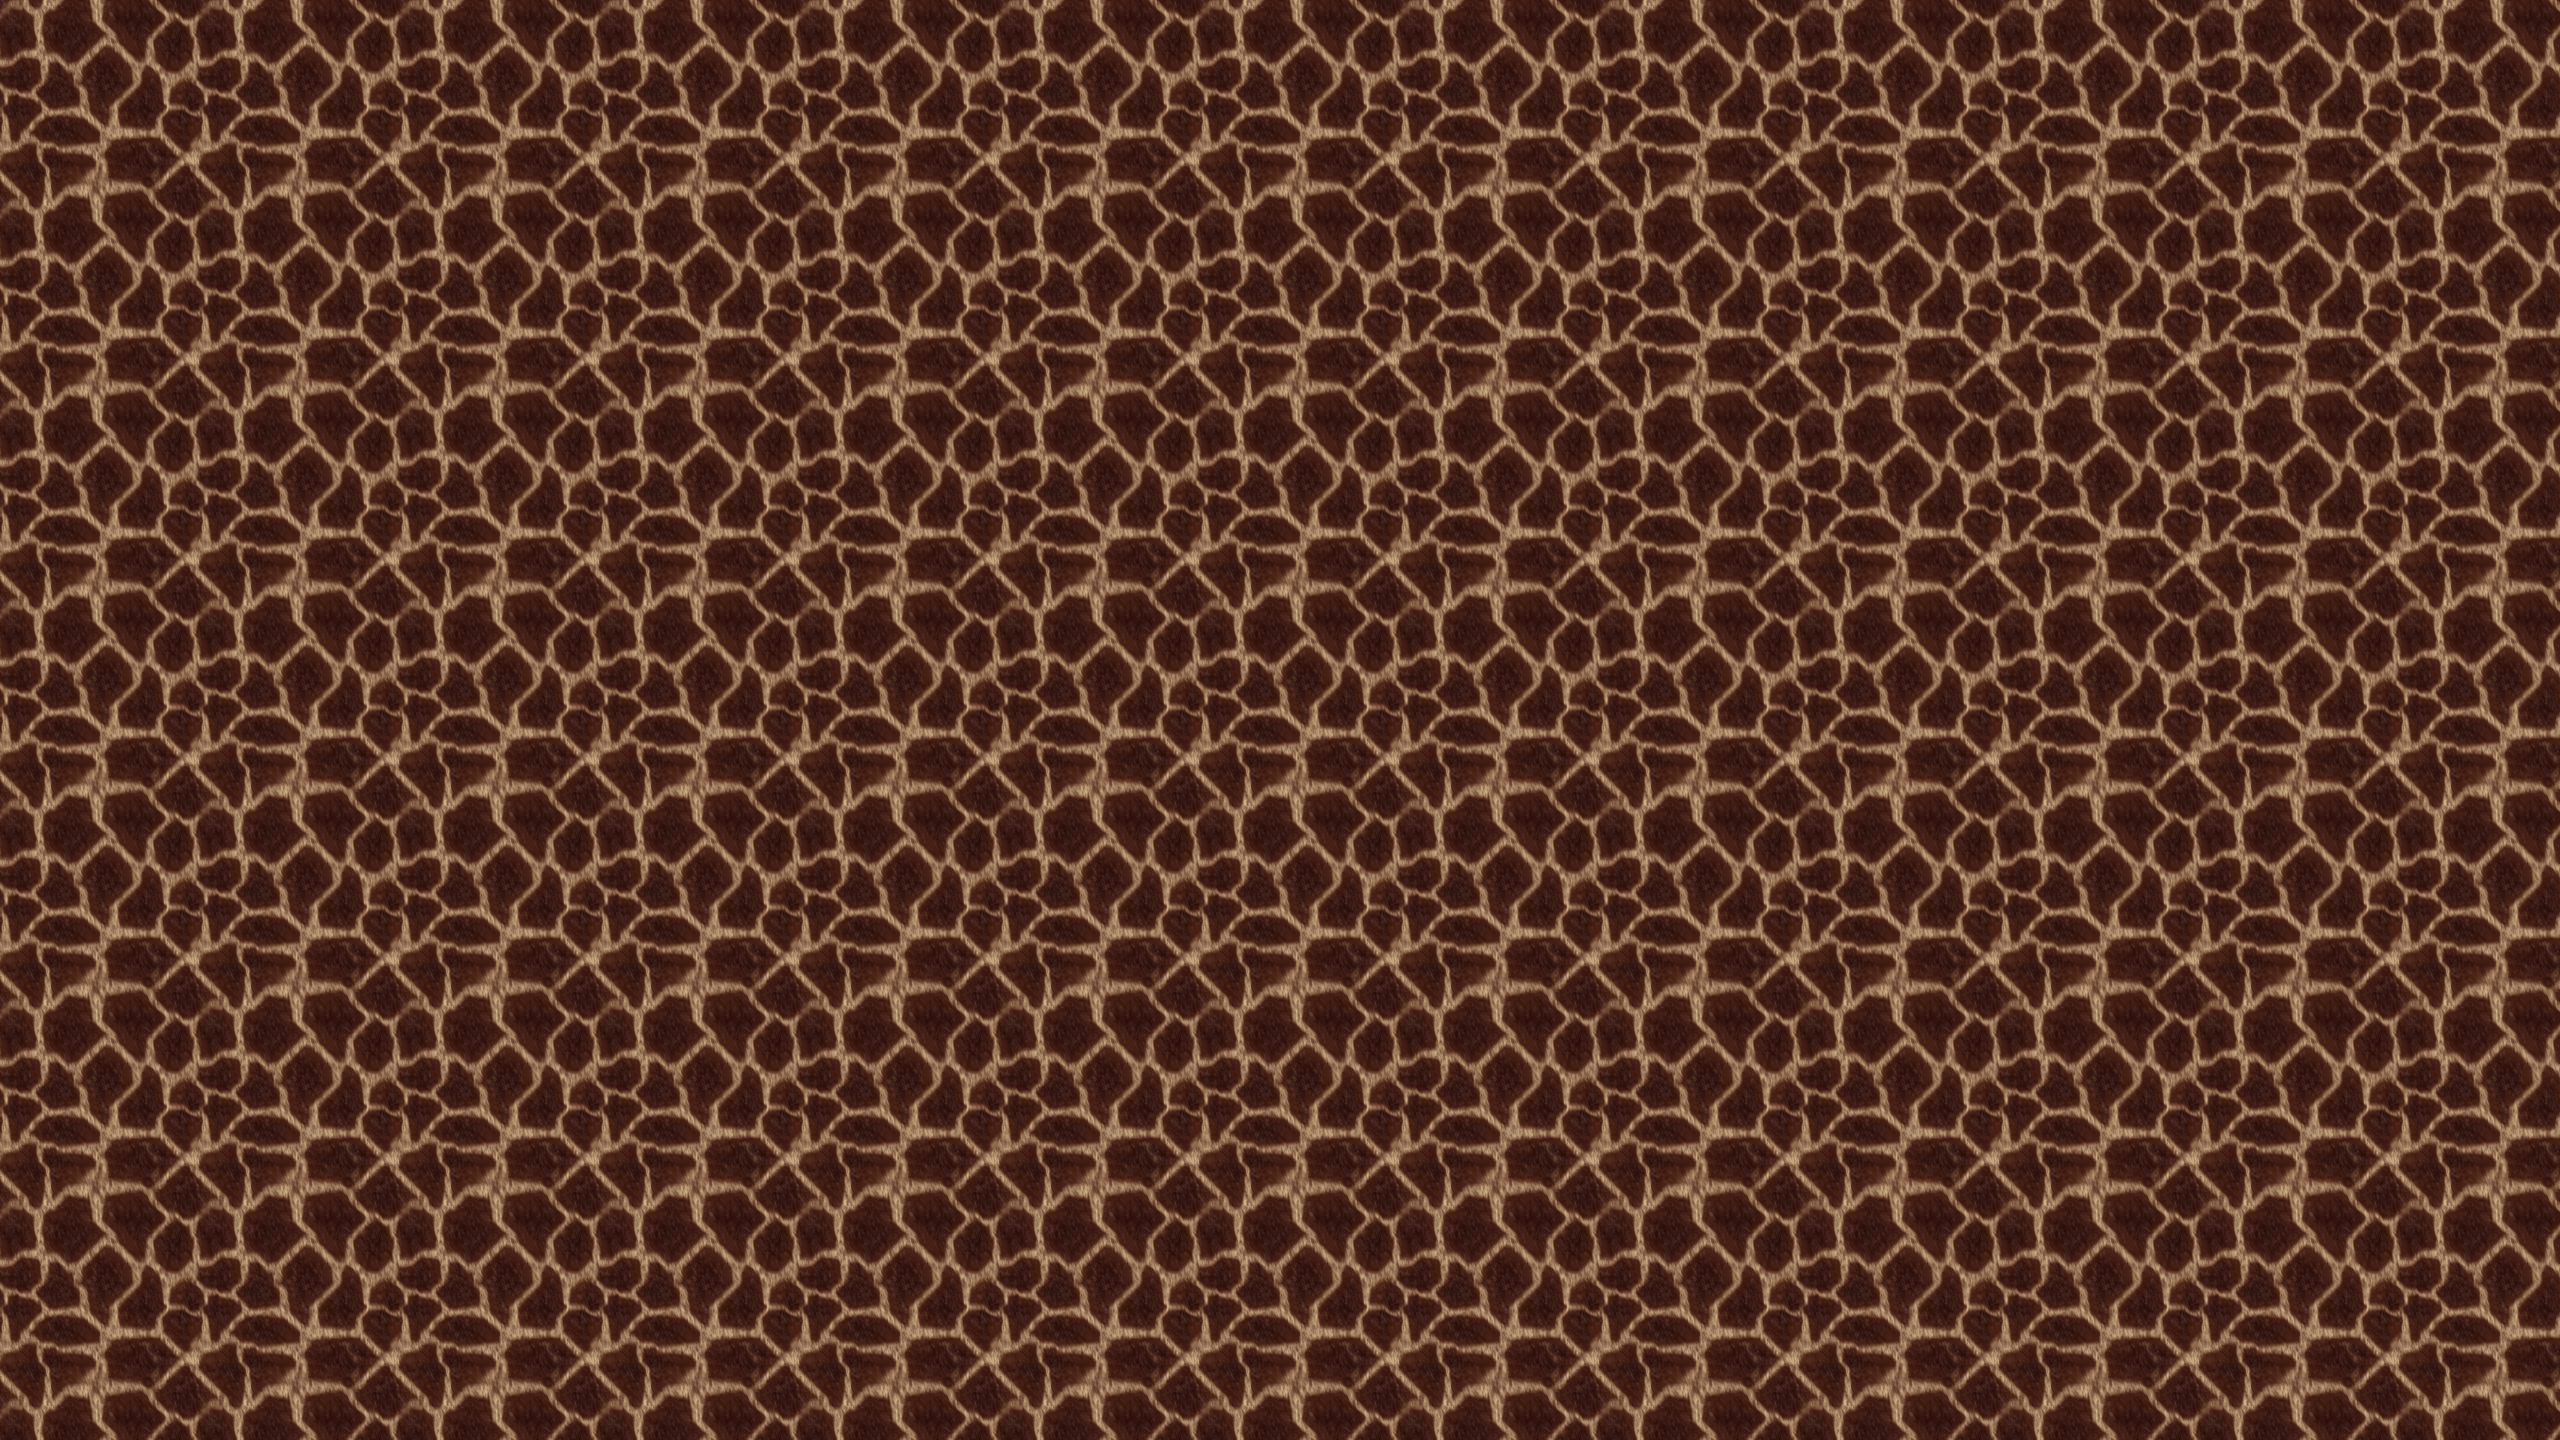 Giraffe Animal Print Desktop Wallpaper